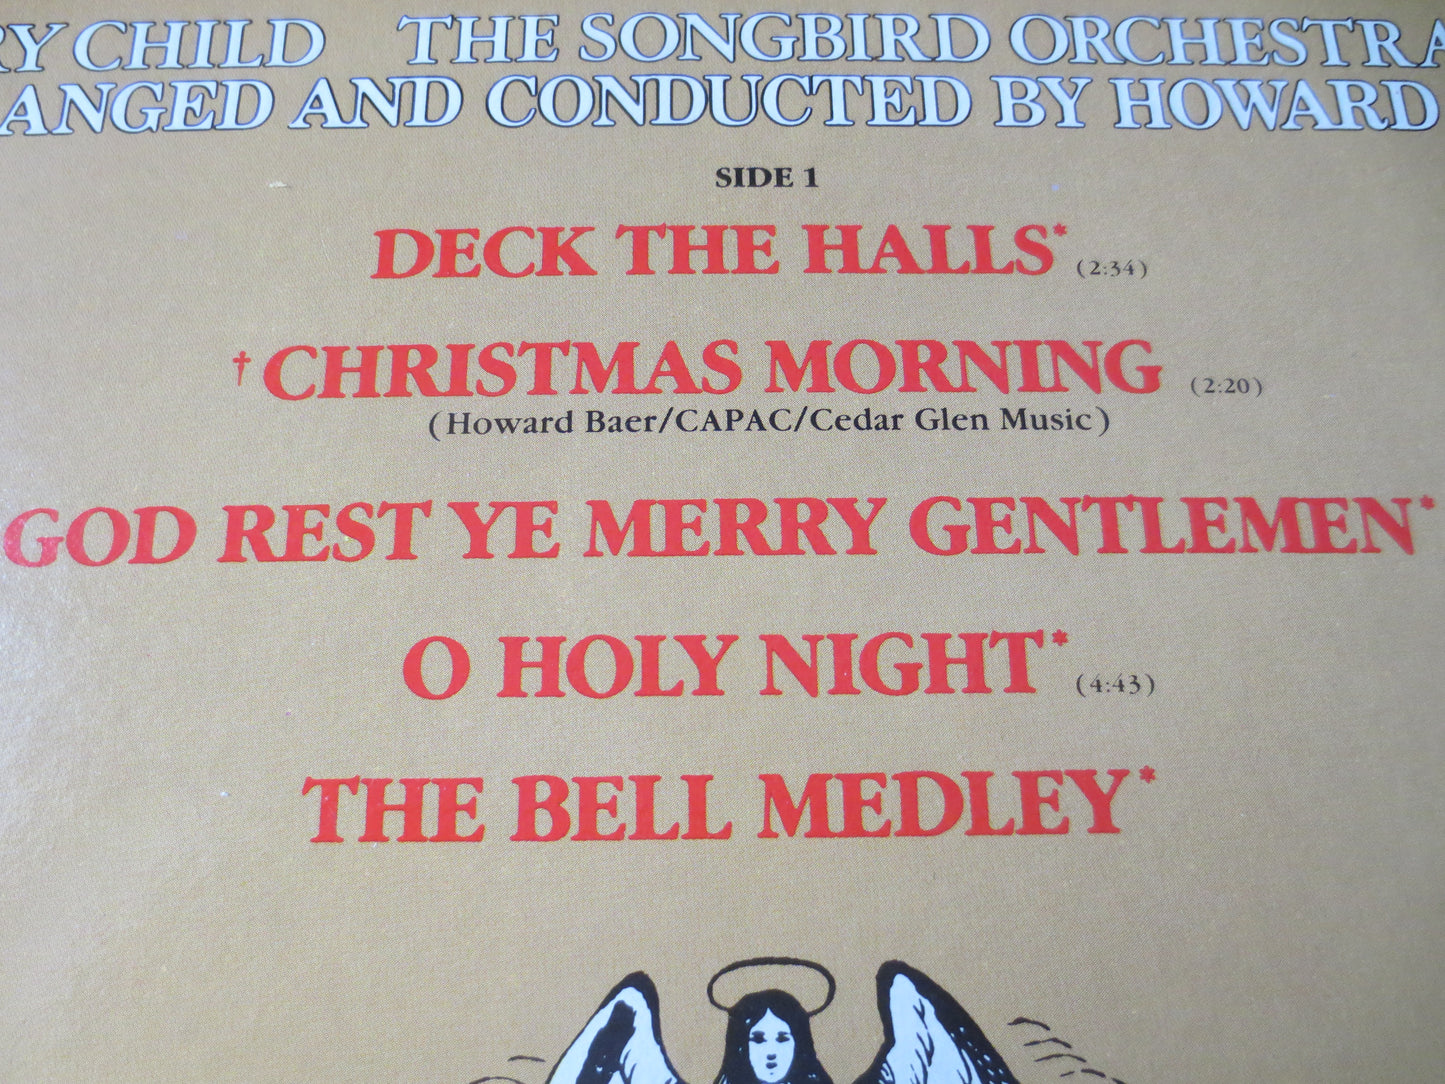 CHRISTMAS Album, No Ordinary CHILD, CHRISTMAS Songs, Christmas Record, Christmas Vinyl, Christmas Lp, Vinyl lp, 1980 Record